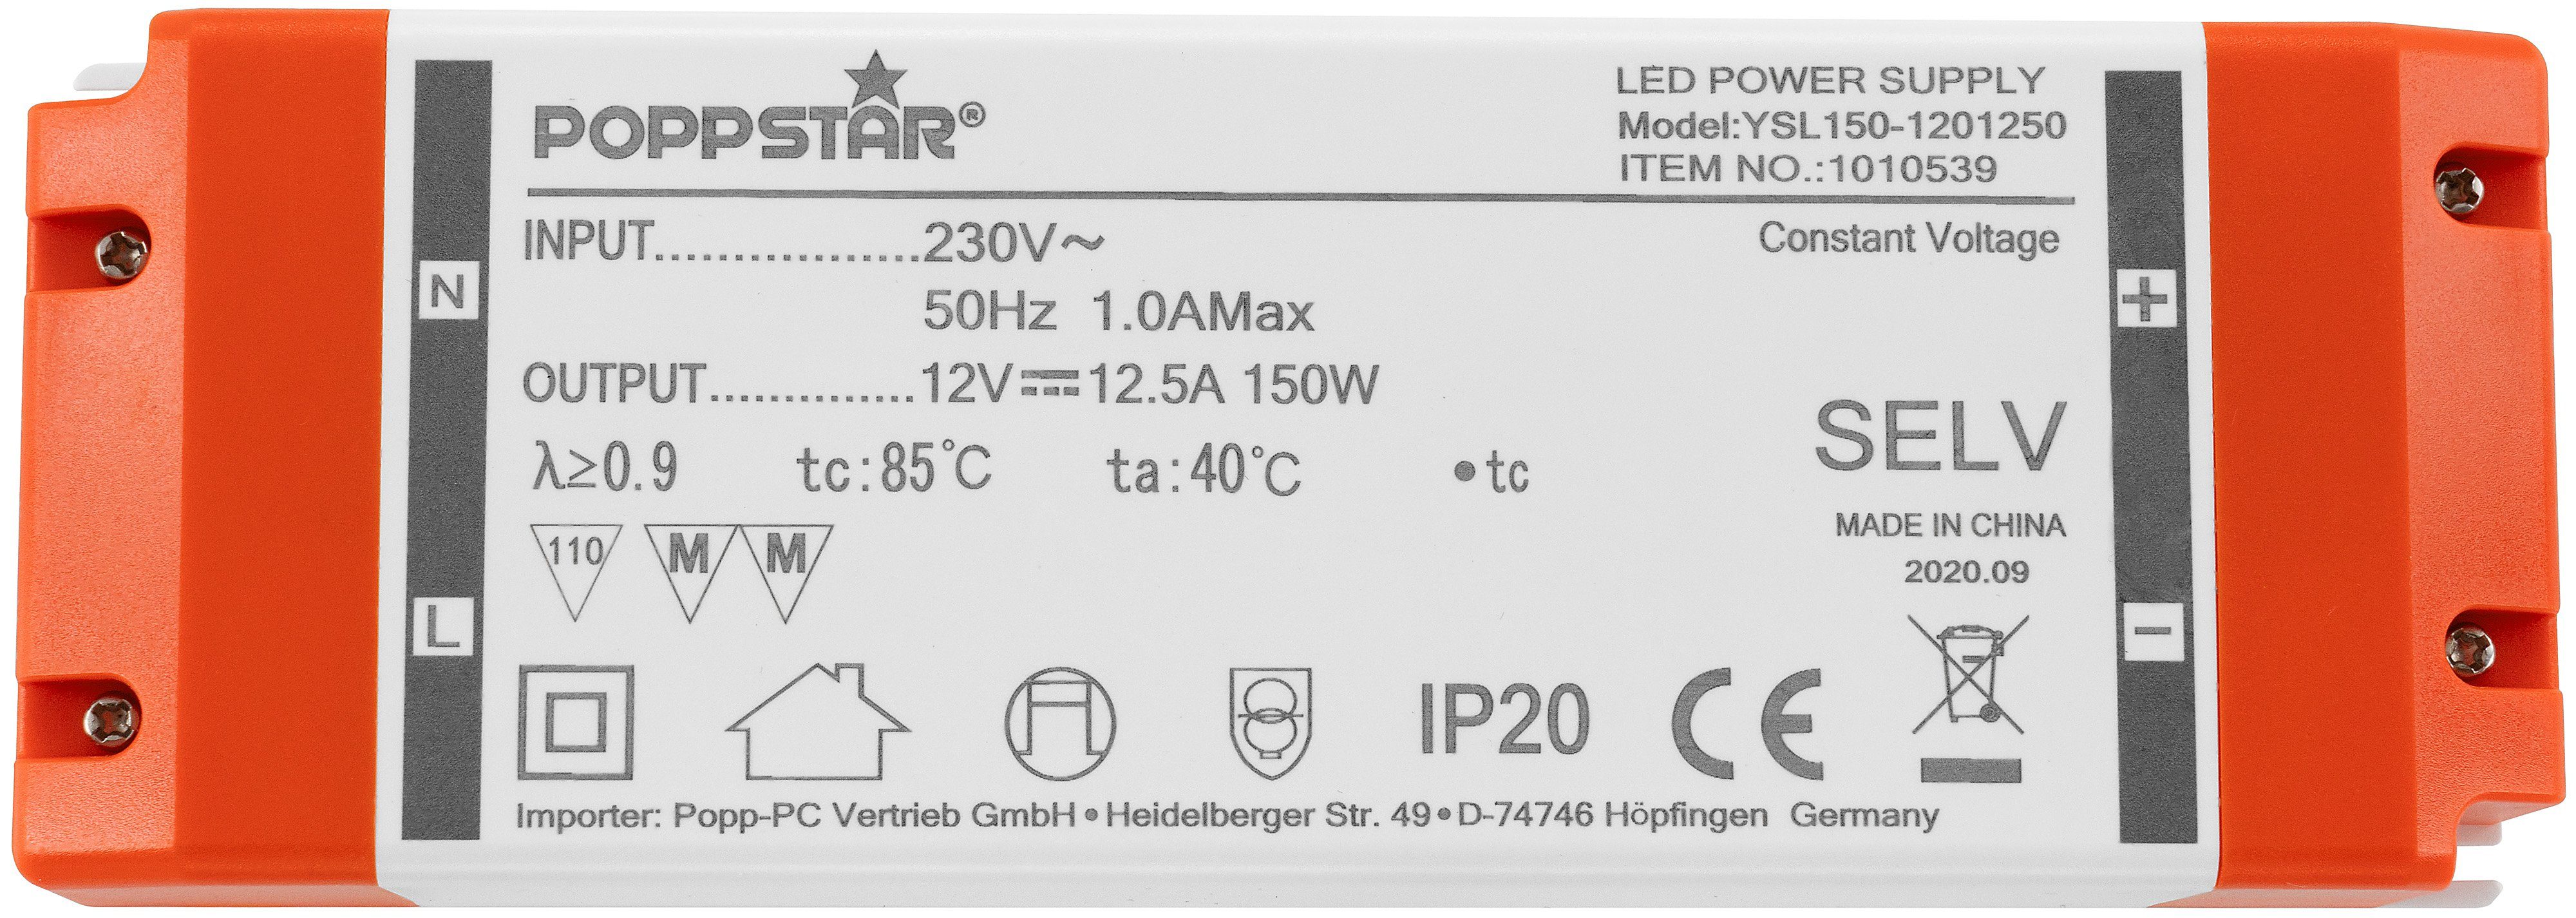 Transformator 230V 1,5 Poppstar Watt W 150 12V (12V Trafo bis / DC für LED 12,5A LED AC LEDs) Trafo